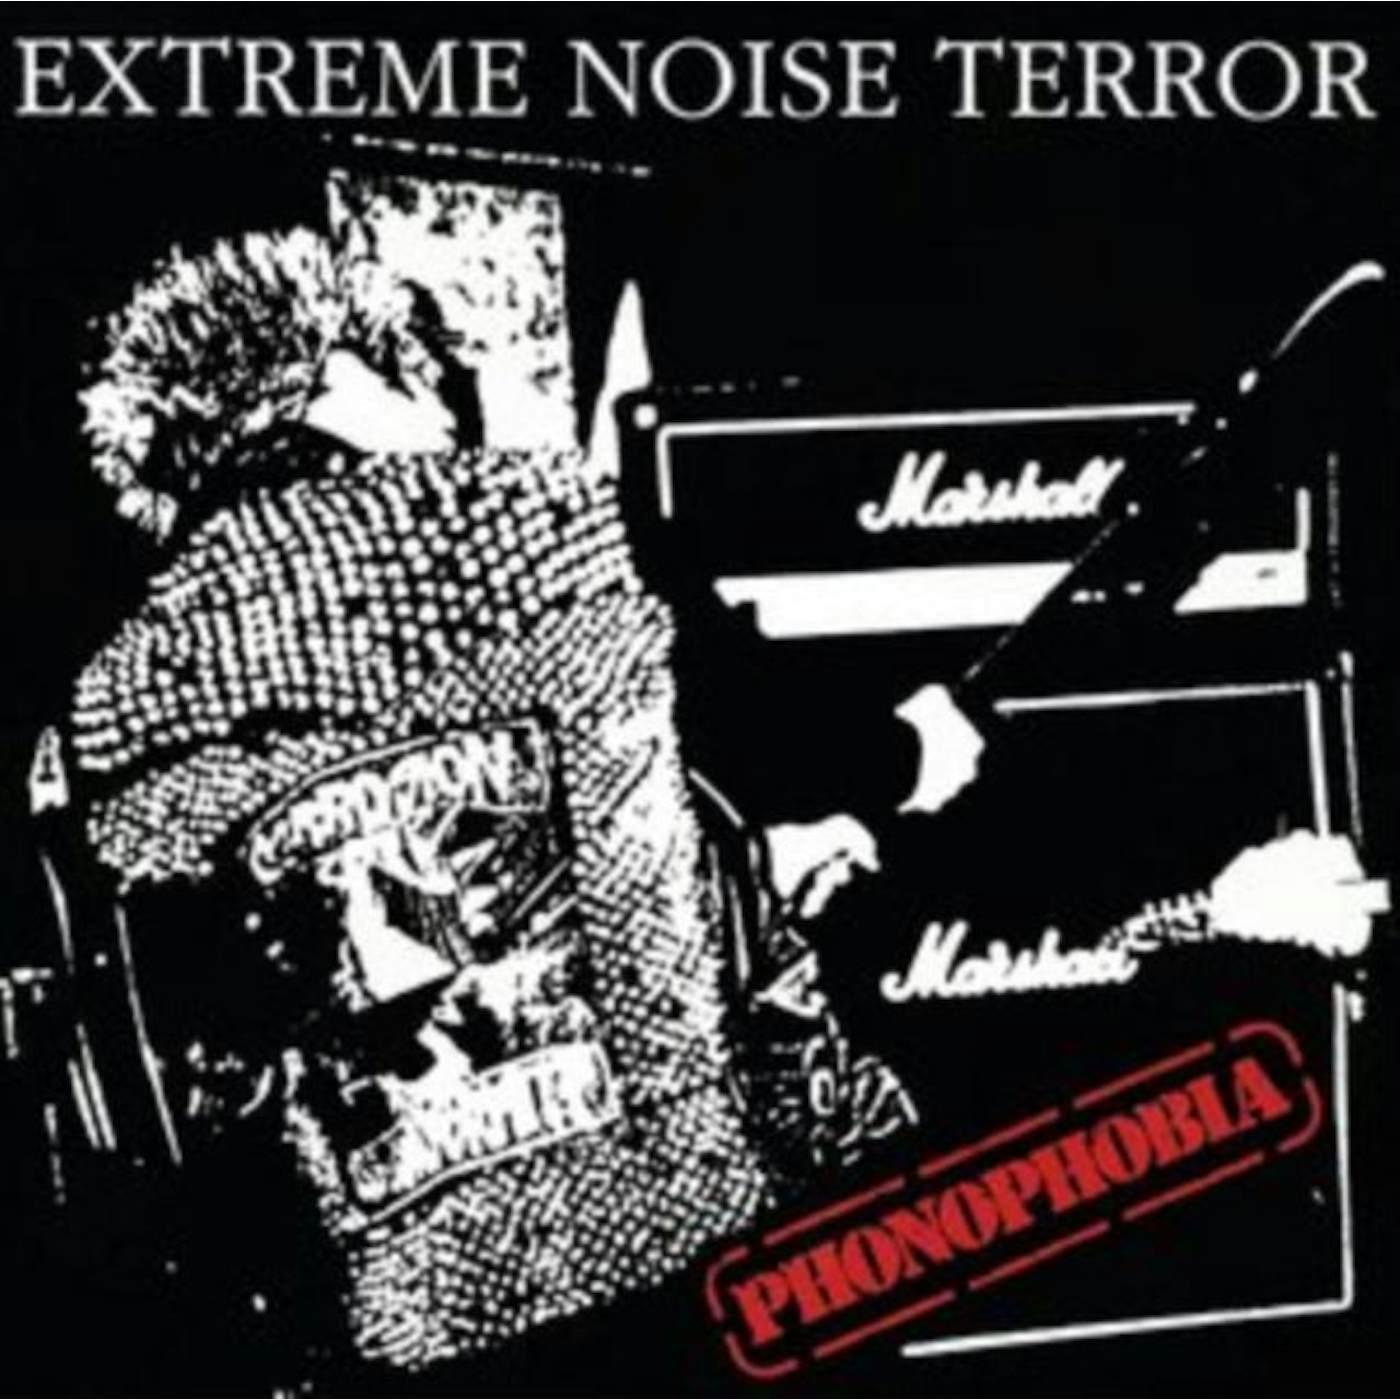 Extreme Noise Terror LP - Phonophobia (Red Vinyl)